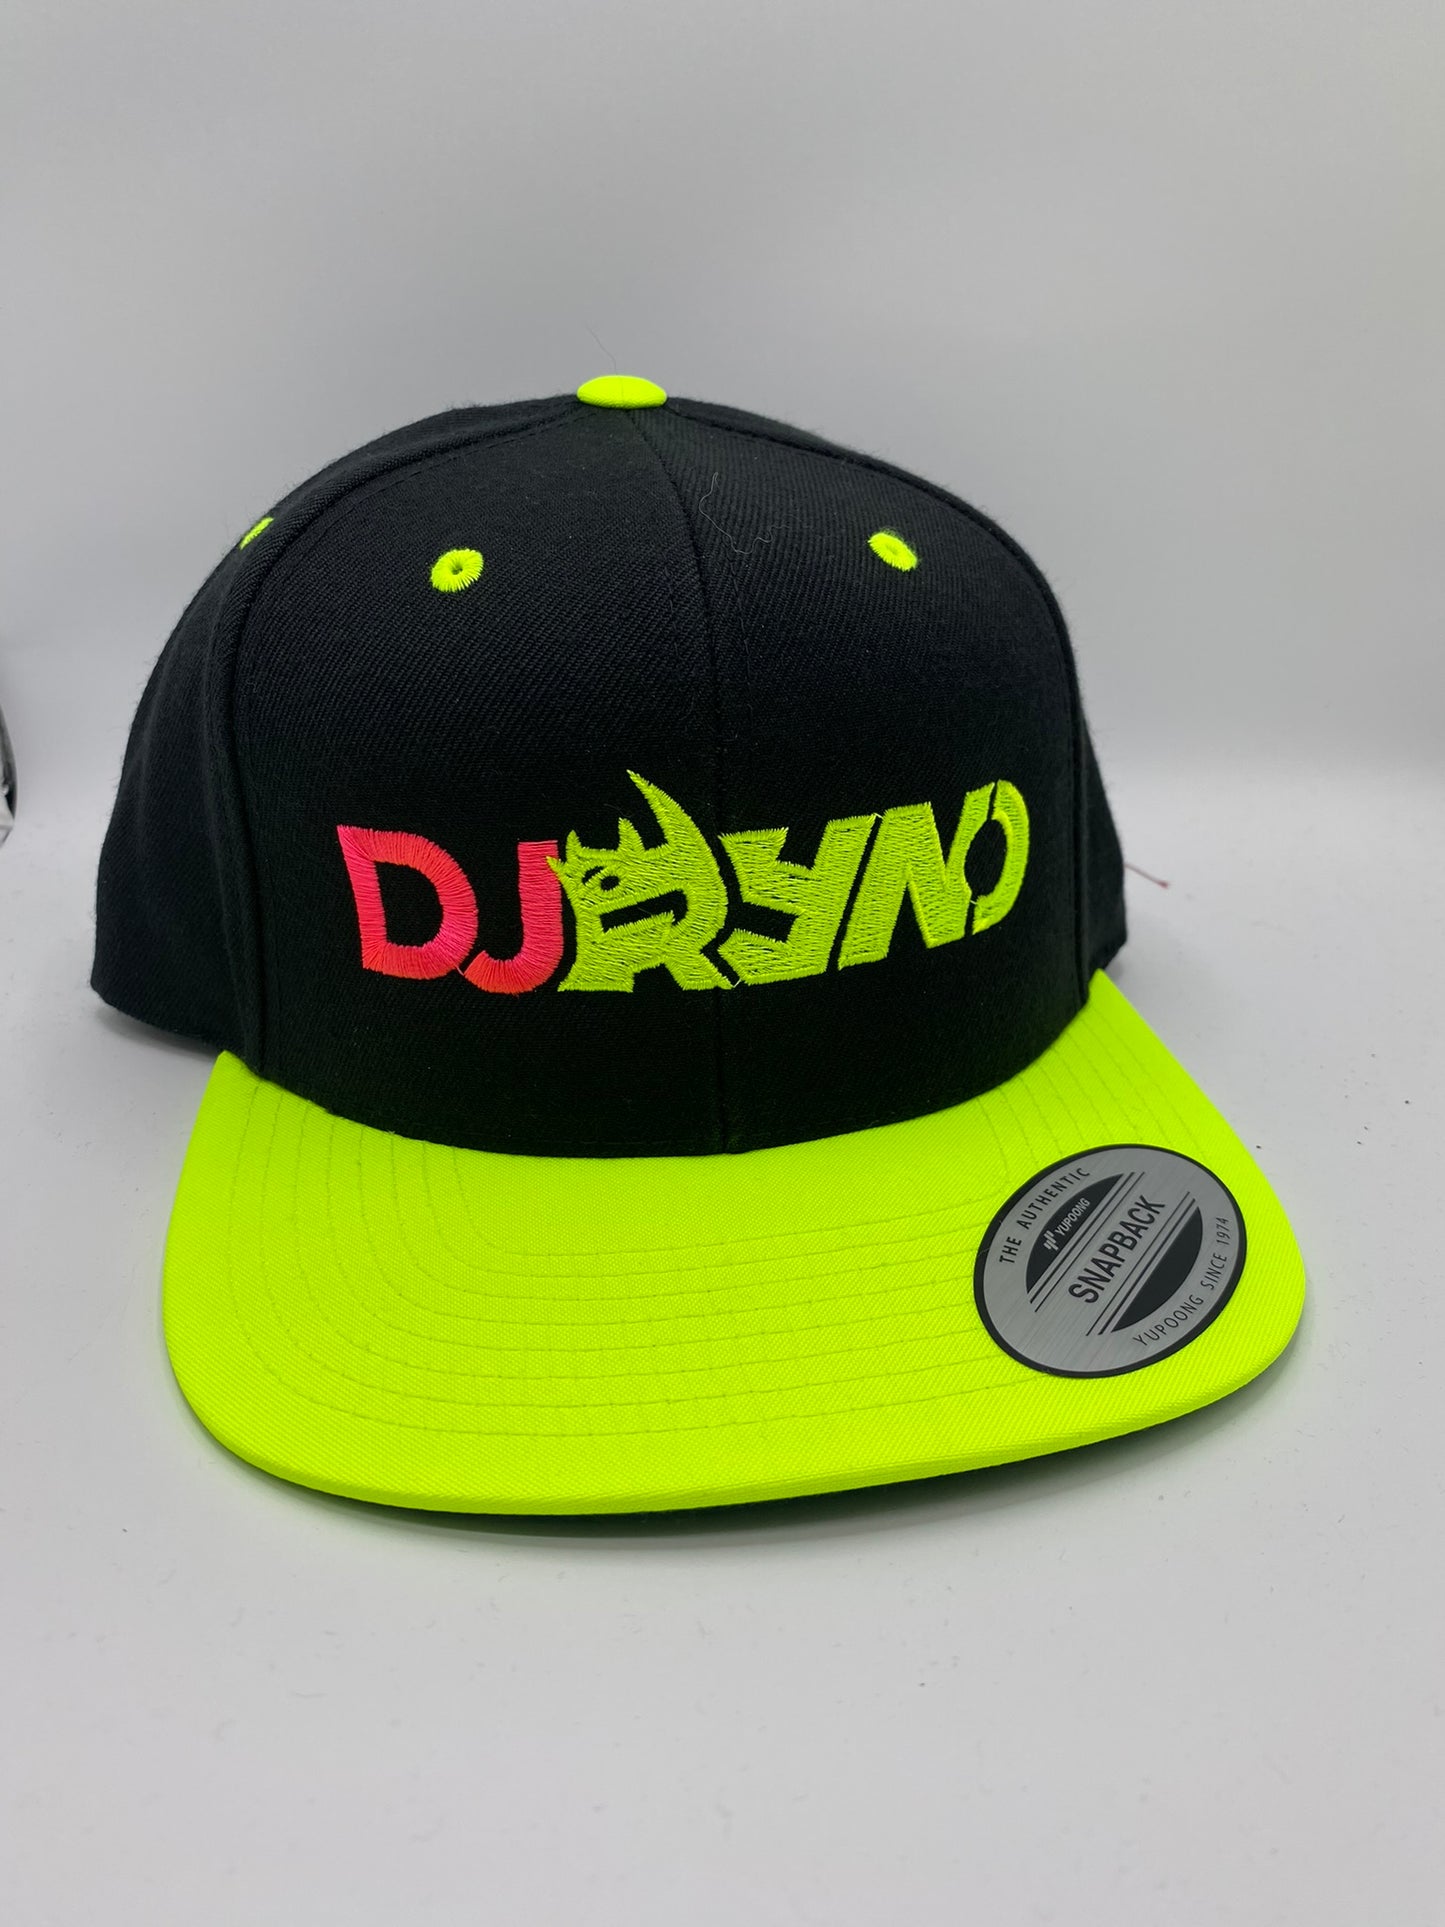 DJ Ryno Neon Hats